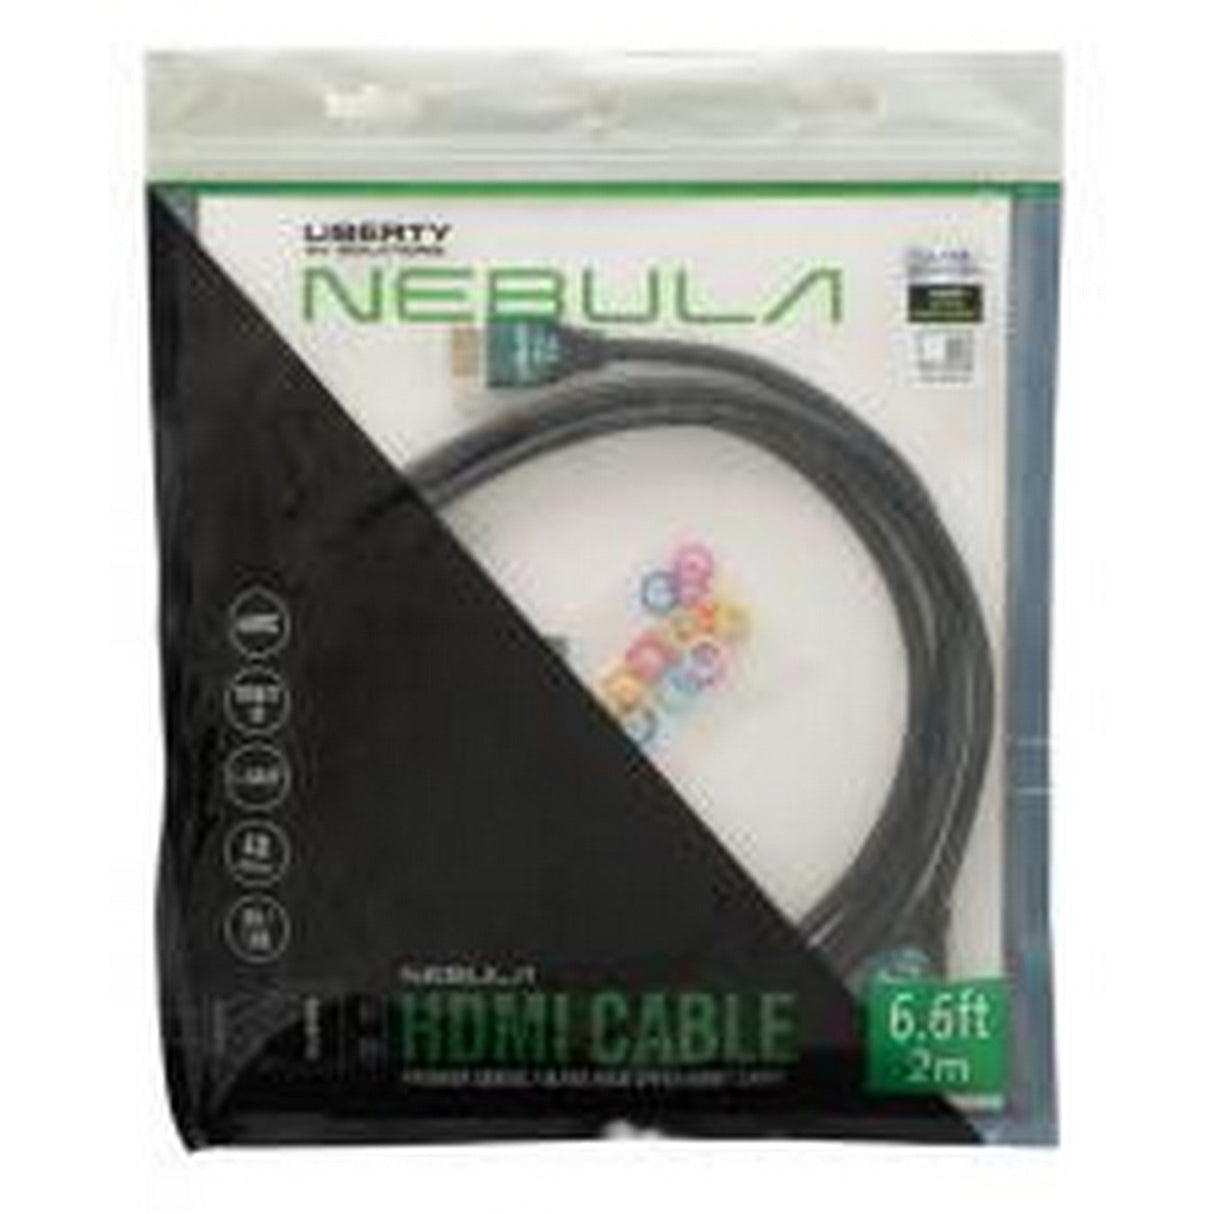 Liberty AV NEBULA-HM Nebula Premier Series Copper HDMI Cable